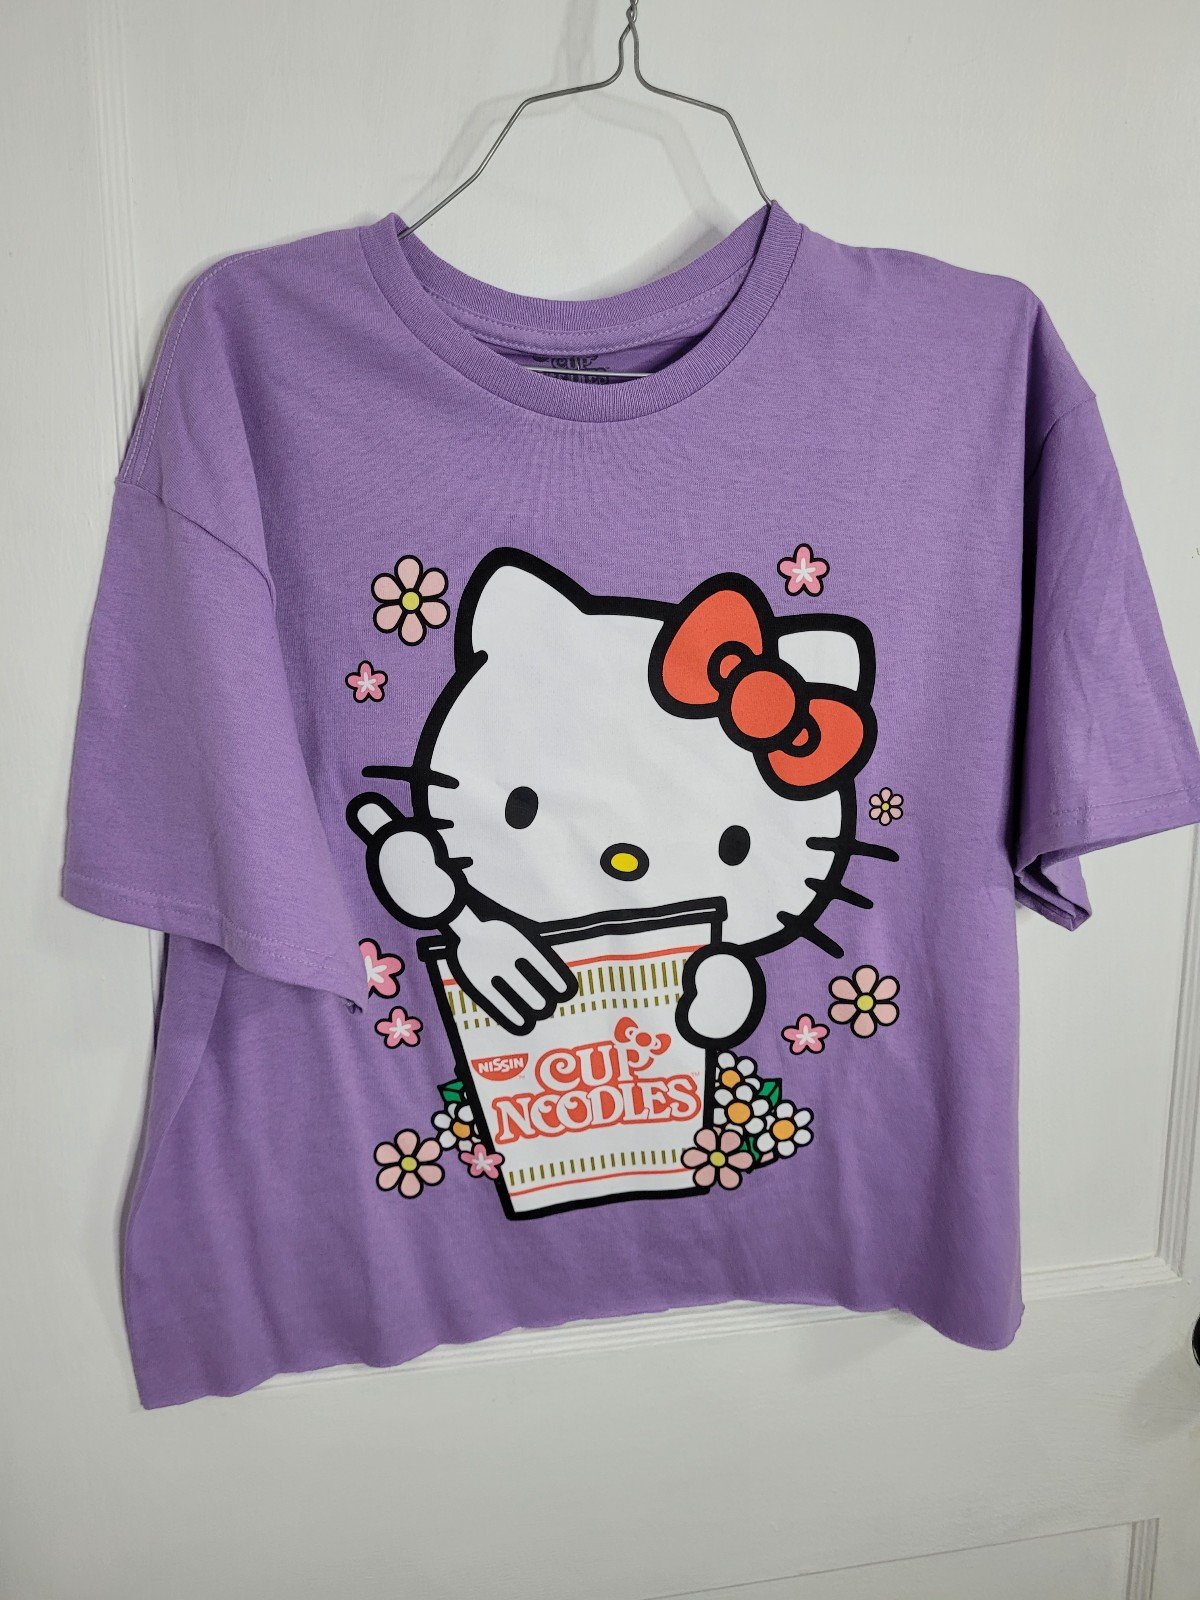 The Best Seller Womens hello kitty shirt Lbpw4slIB online store